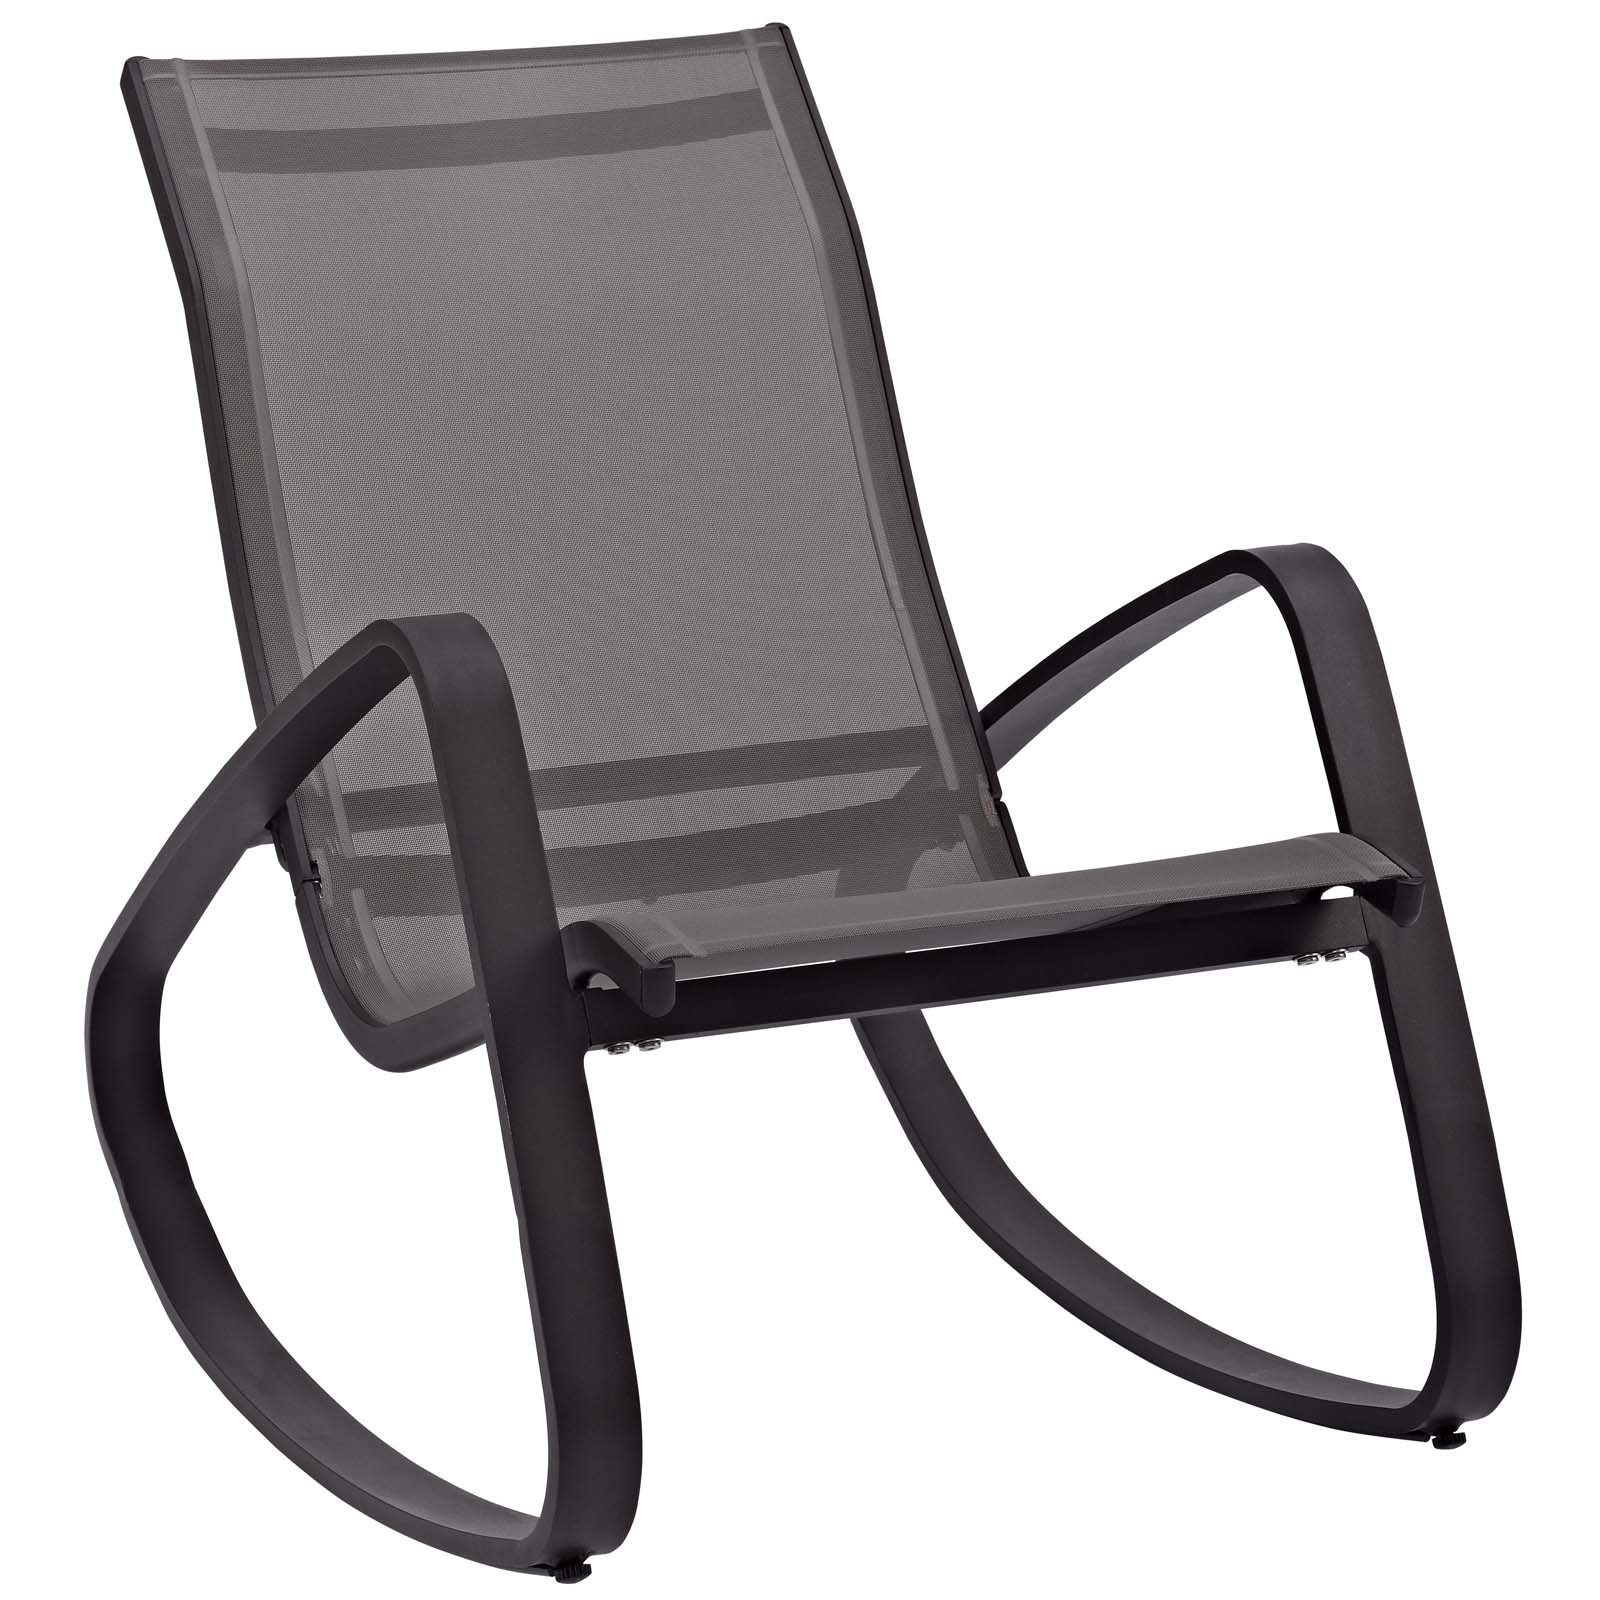 Modern Contemporary Urban Design Outdoor Patio Balcony Garden Furniture Lounge Chair Set, Set of Two, Aluminum Metal Steel, Black - image 3 of 6